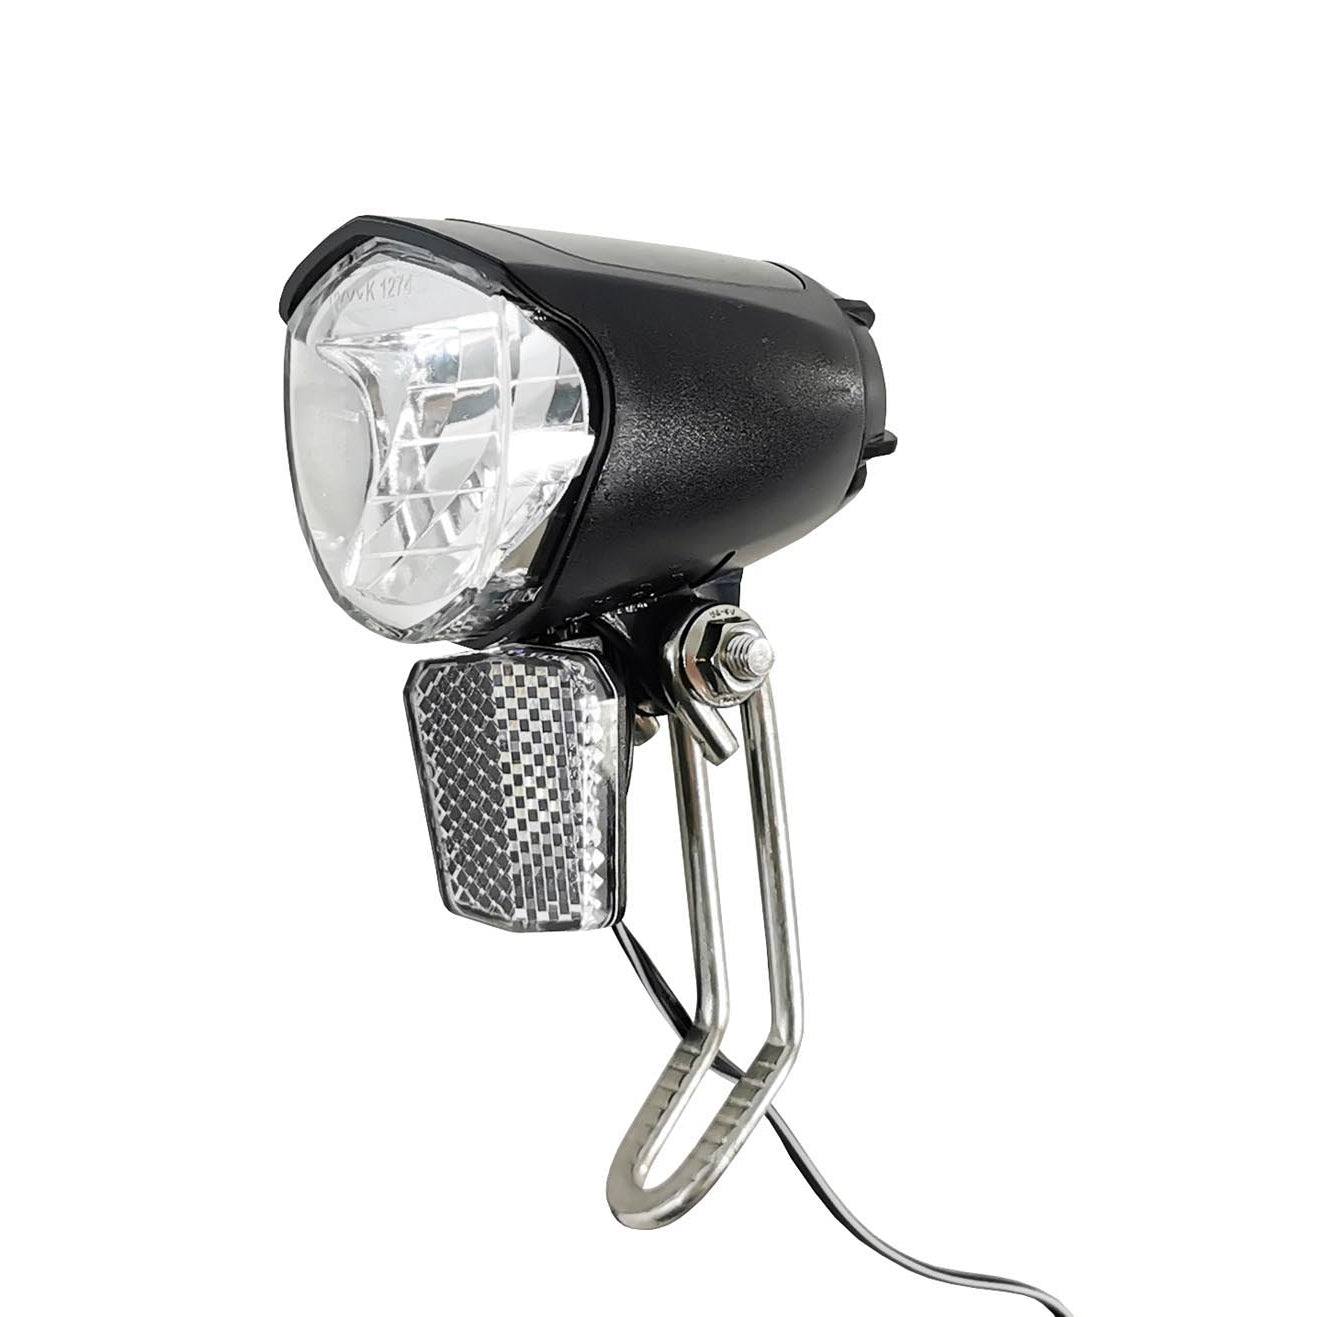 LED eBike Fahrradlampe 70 Lux Frontlampe Scheinwerfer Frontlicht StVZO